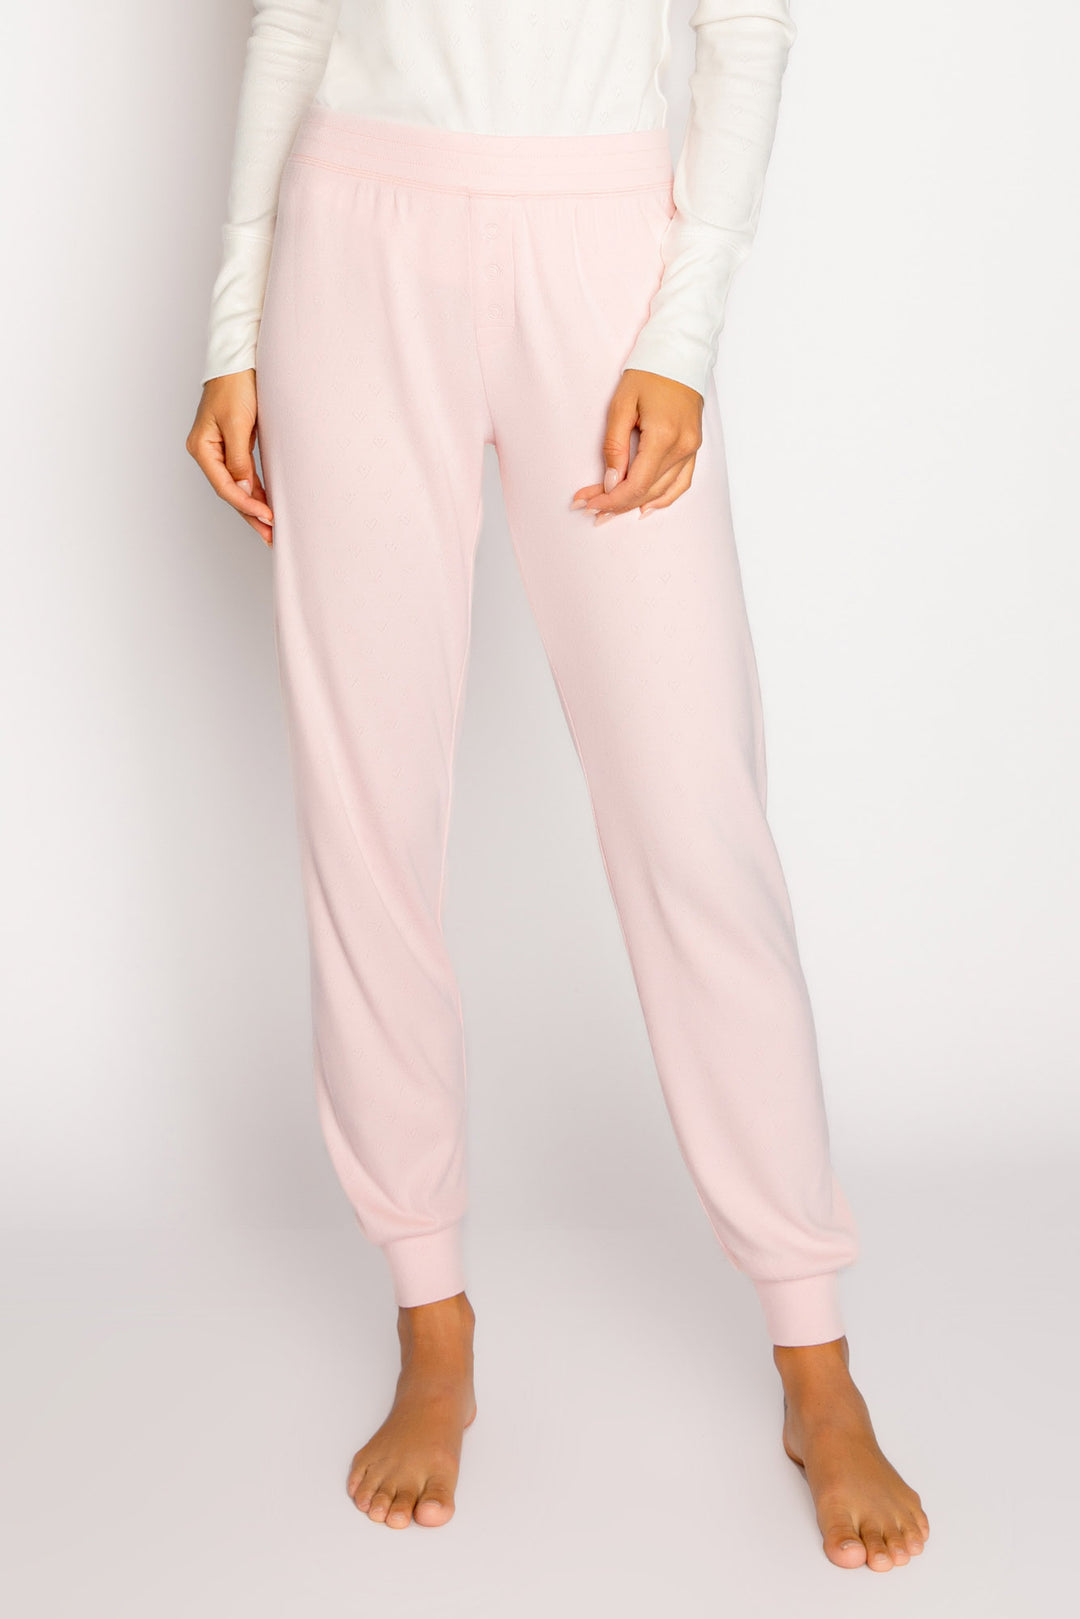 Women's Classic Pink Pajama Pants Pointelle Hearts – P.J. Salvage